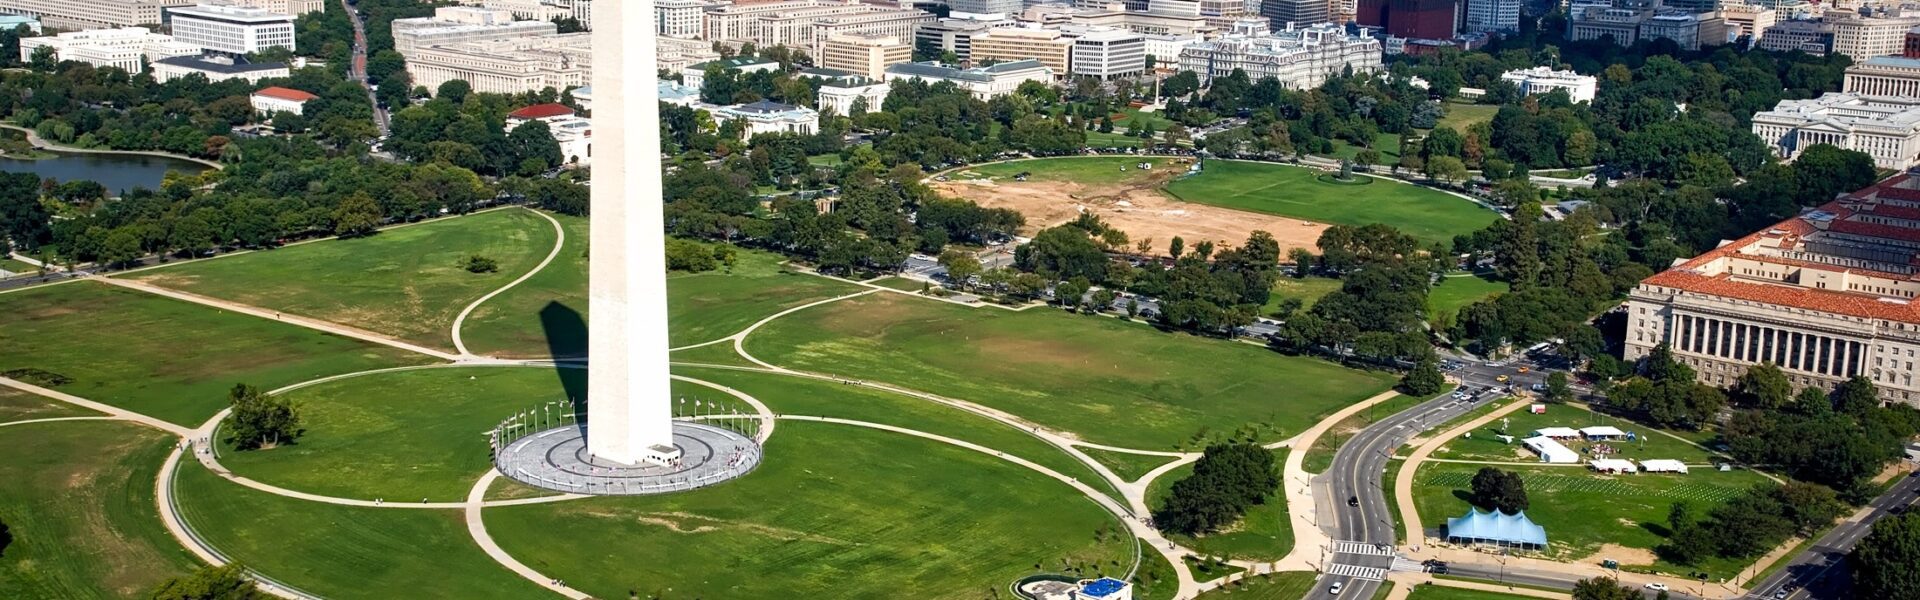 Aerial photograph of Washington Monument